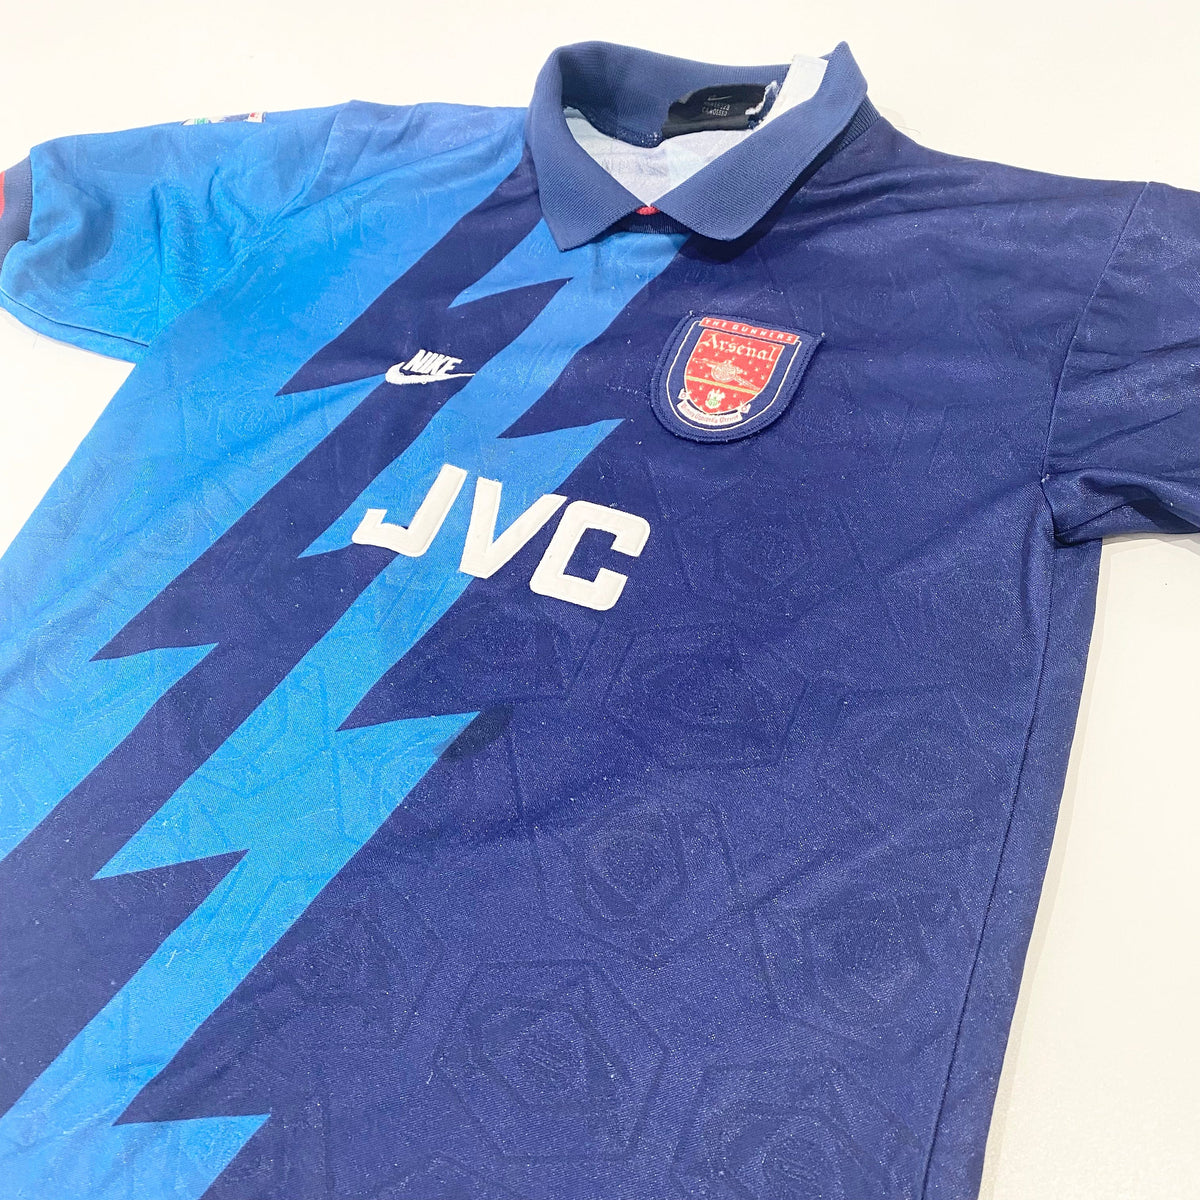 Retro Arsenal Shirts  Vintage Arsenal Shirts – Classic Football Kit